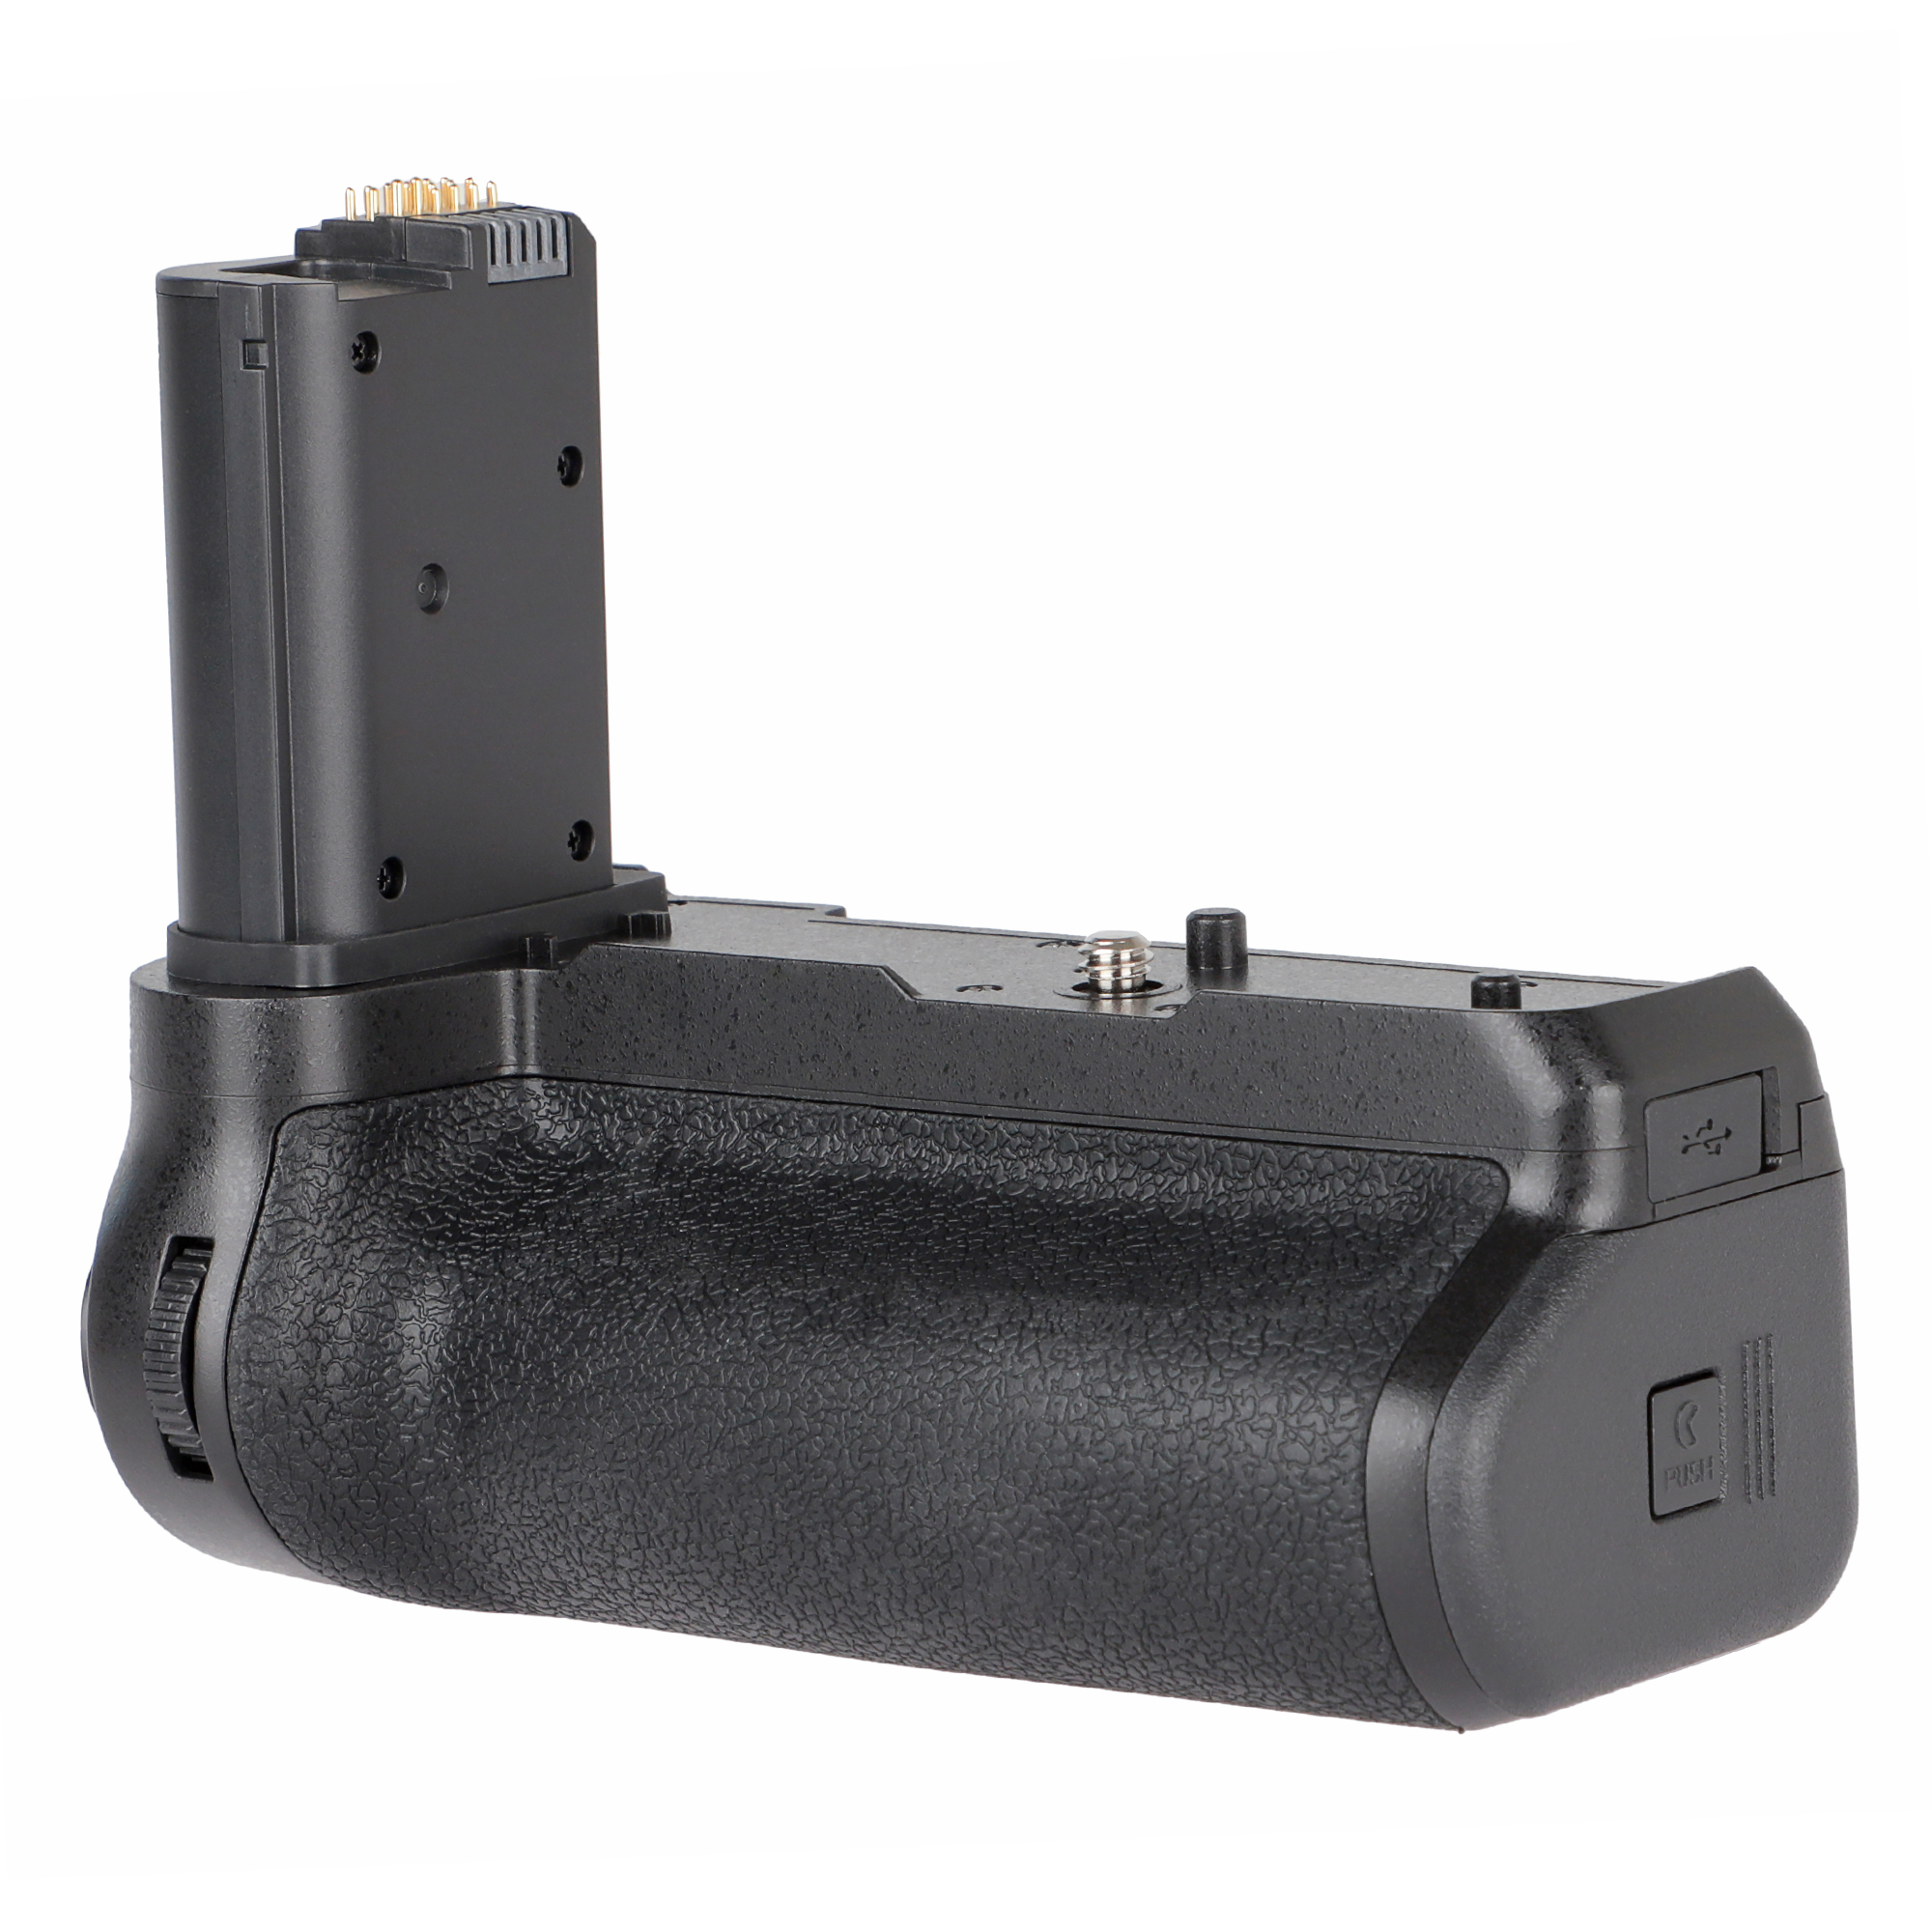 ayex Batteriegriff Set für Nikon Z6II Z7II ersetzt MB-N11 + 2x EN-EL15B Akku